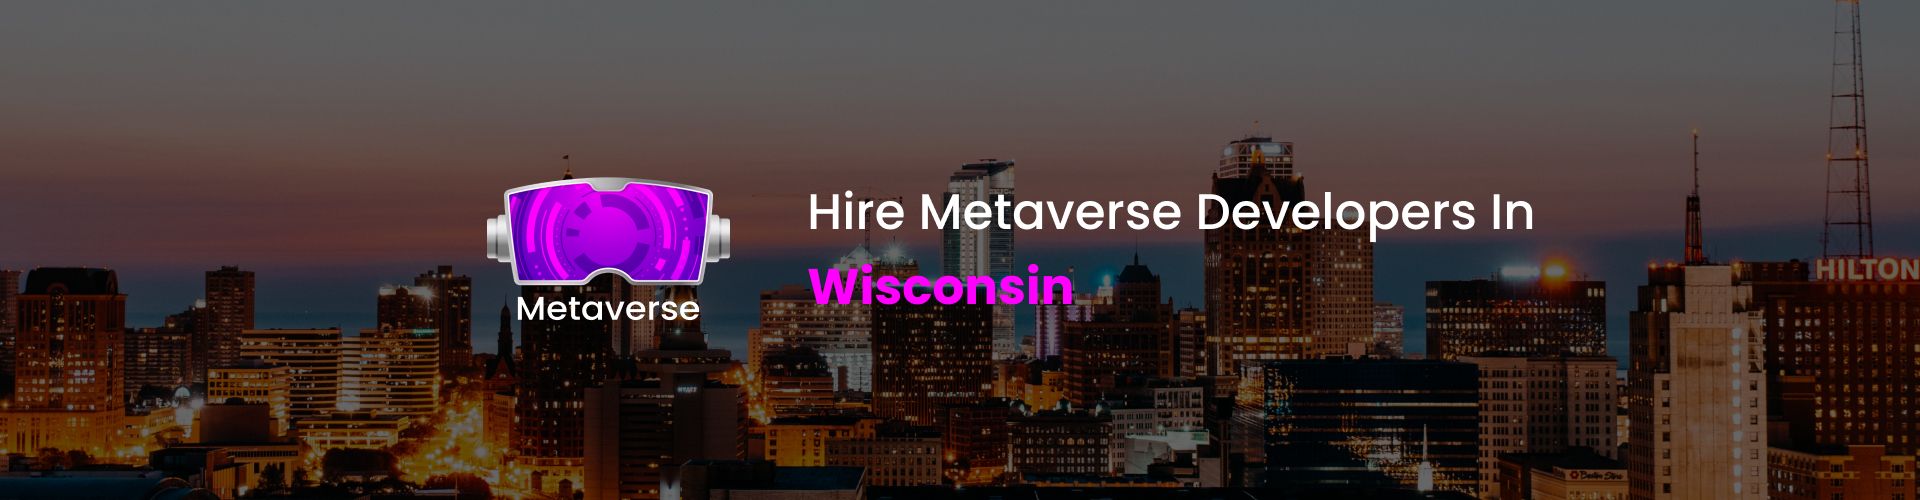 hire metaverse developers in wisconsin